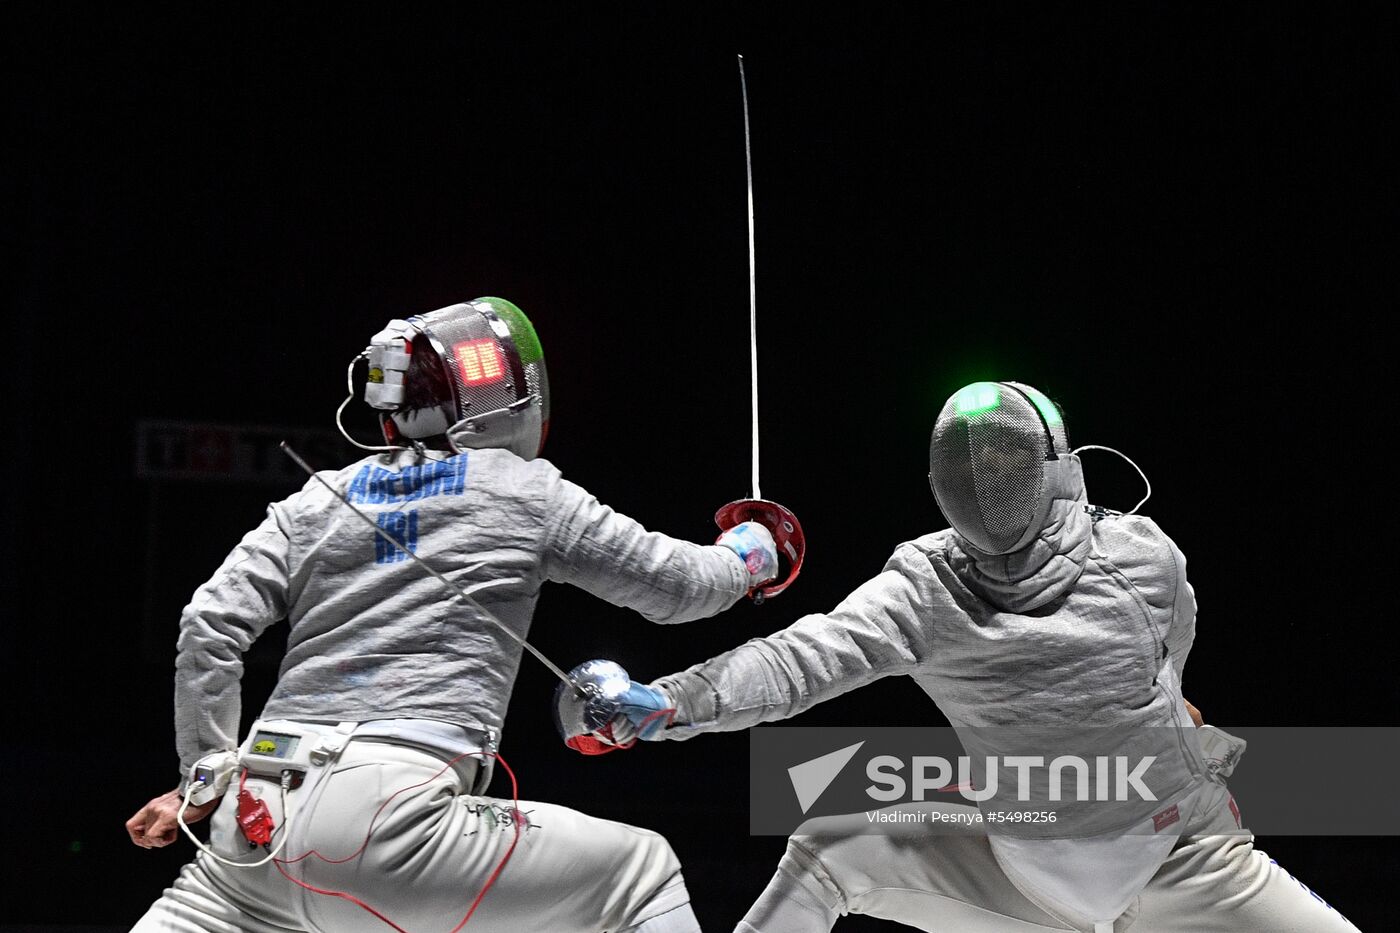 Fencing. Moscow Saber 2018. Men